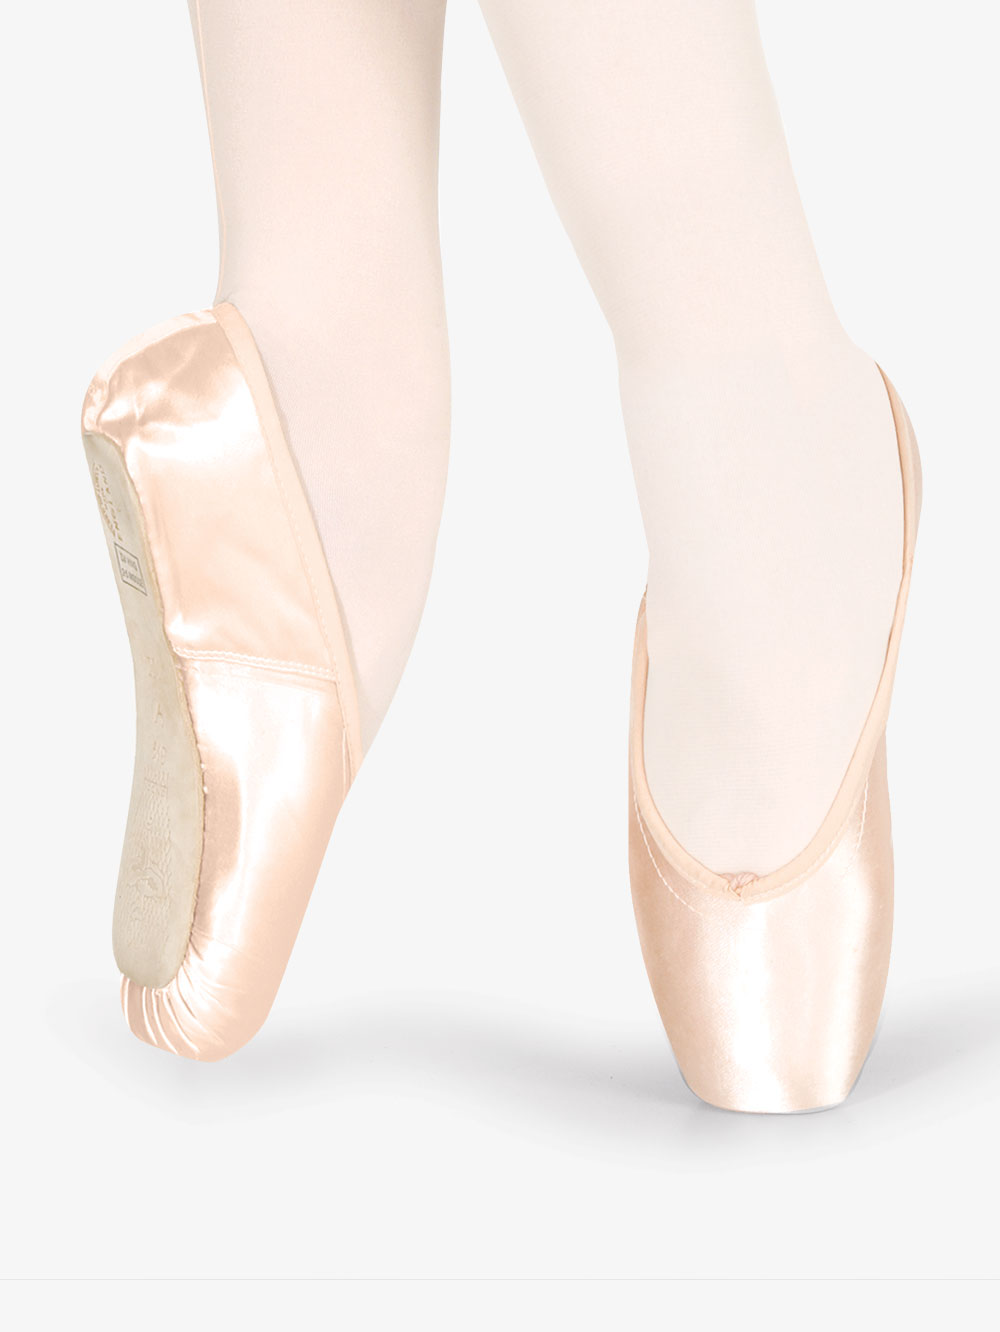 ballet pointe shoes near me